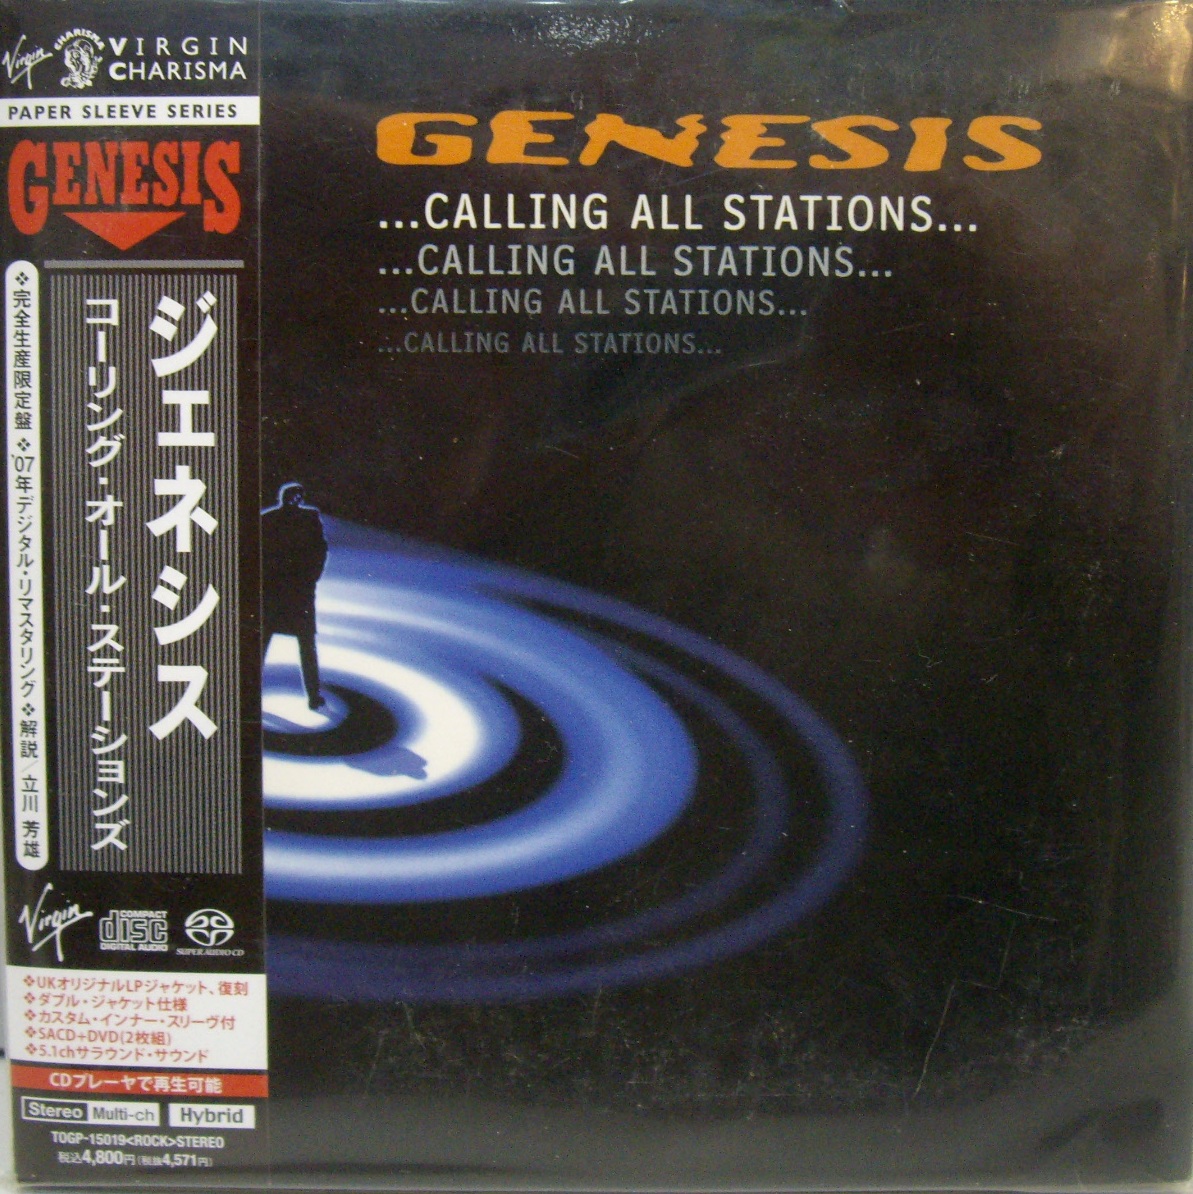 Genesis	Calling All Stations  CD(SACD) + DVD	1997	Japan mini LP	Цена	7 500 ₽
